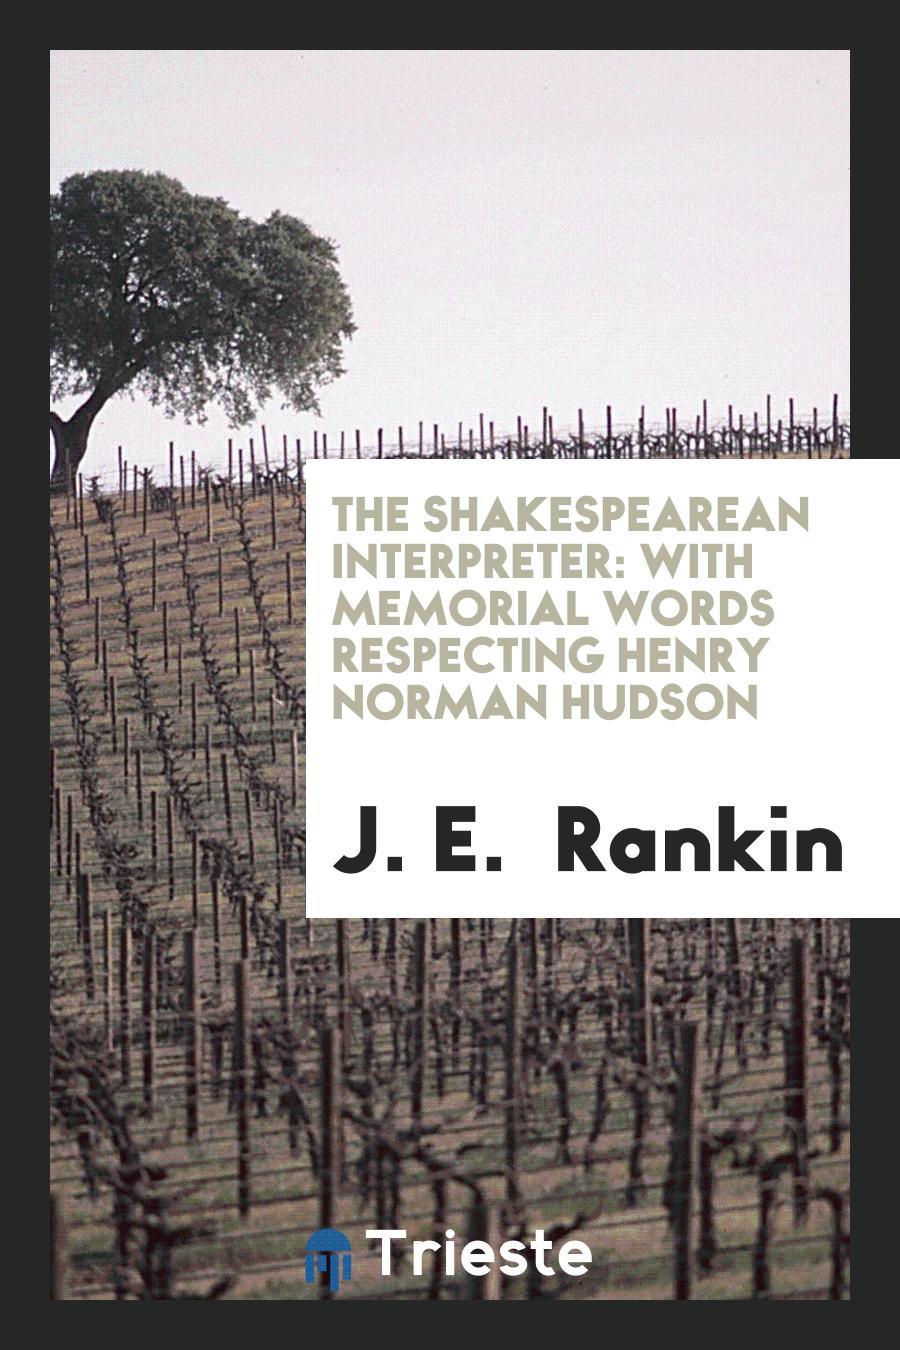 J. E. Rankin - The Shakespearean Interpreter: With Memorial Words Respecting Henry Norman Hudson